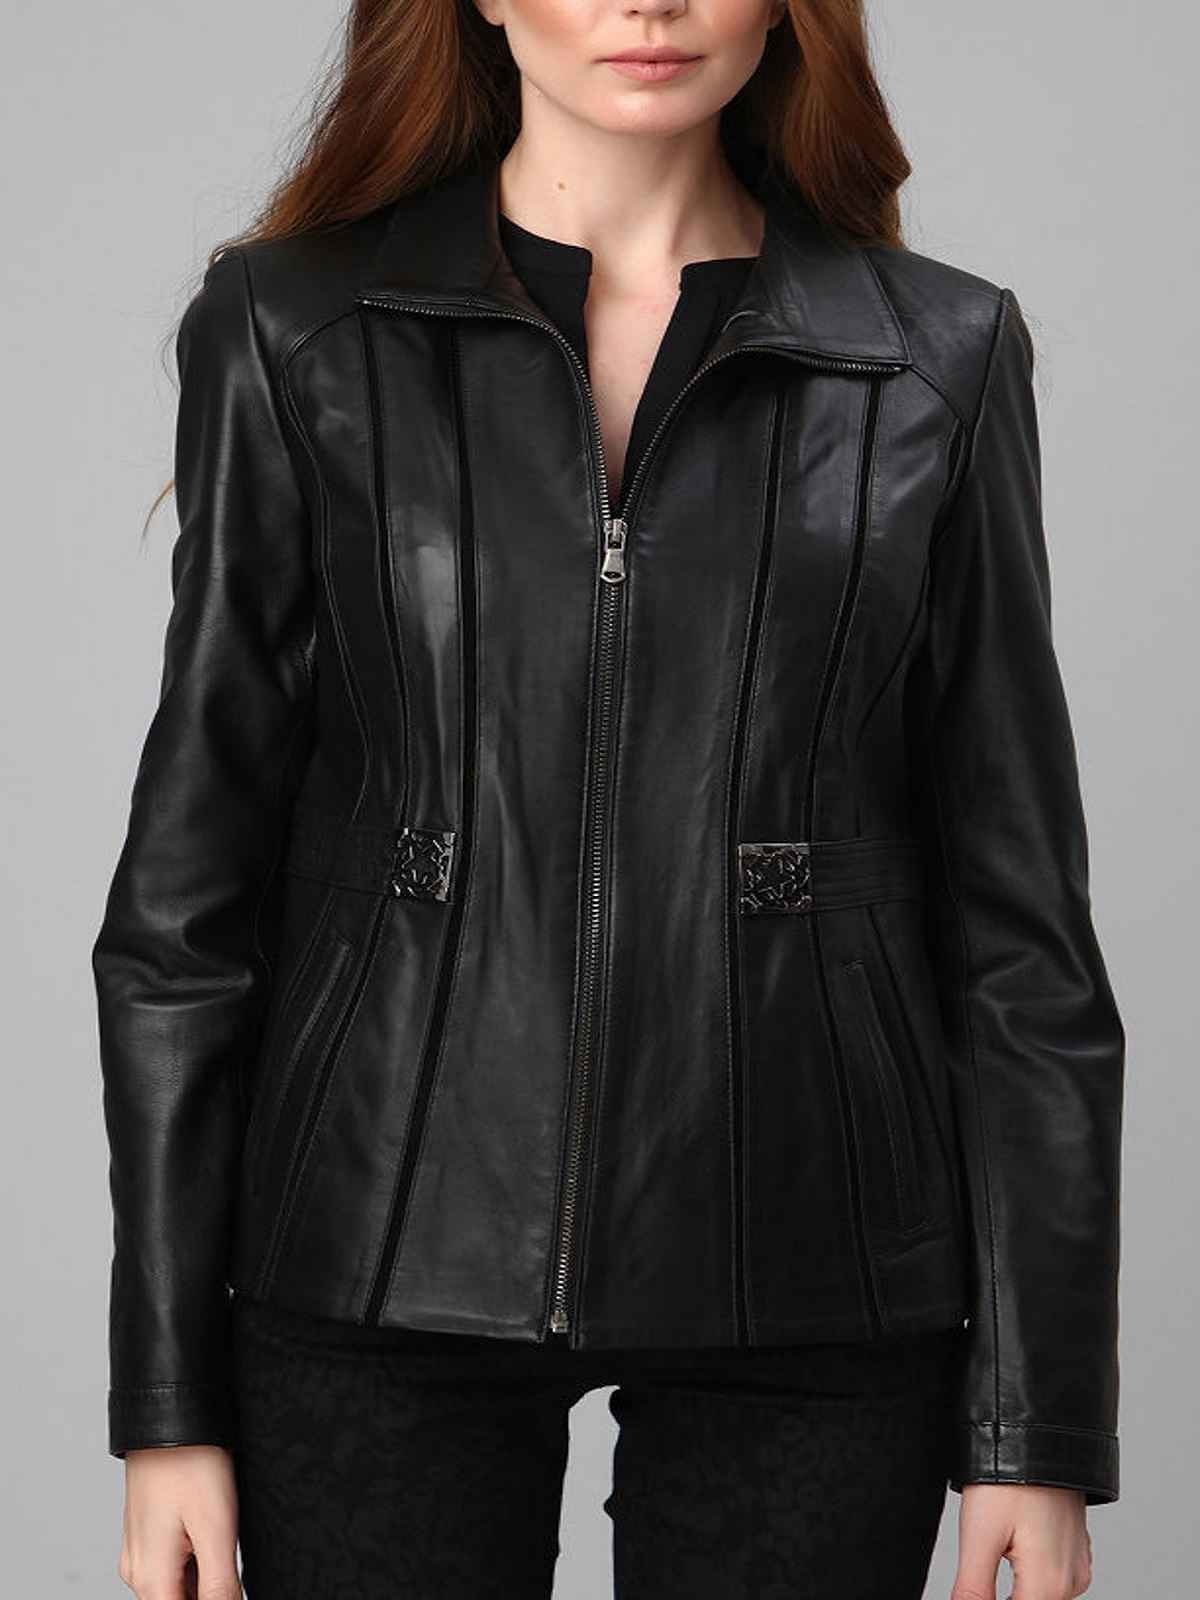 Womens Stripes Black Leather Jacket